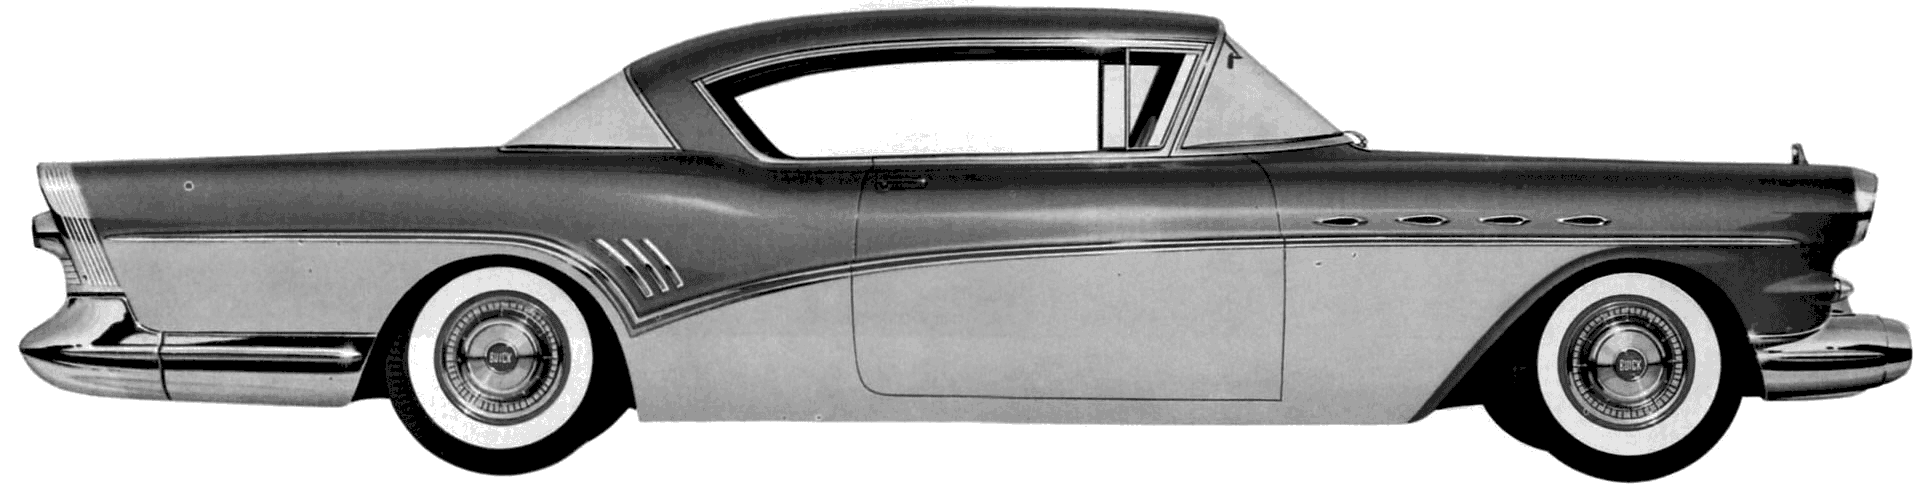 Auto Buick Super Riviera Hardtop 1957 